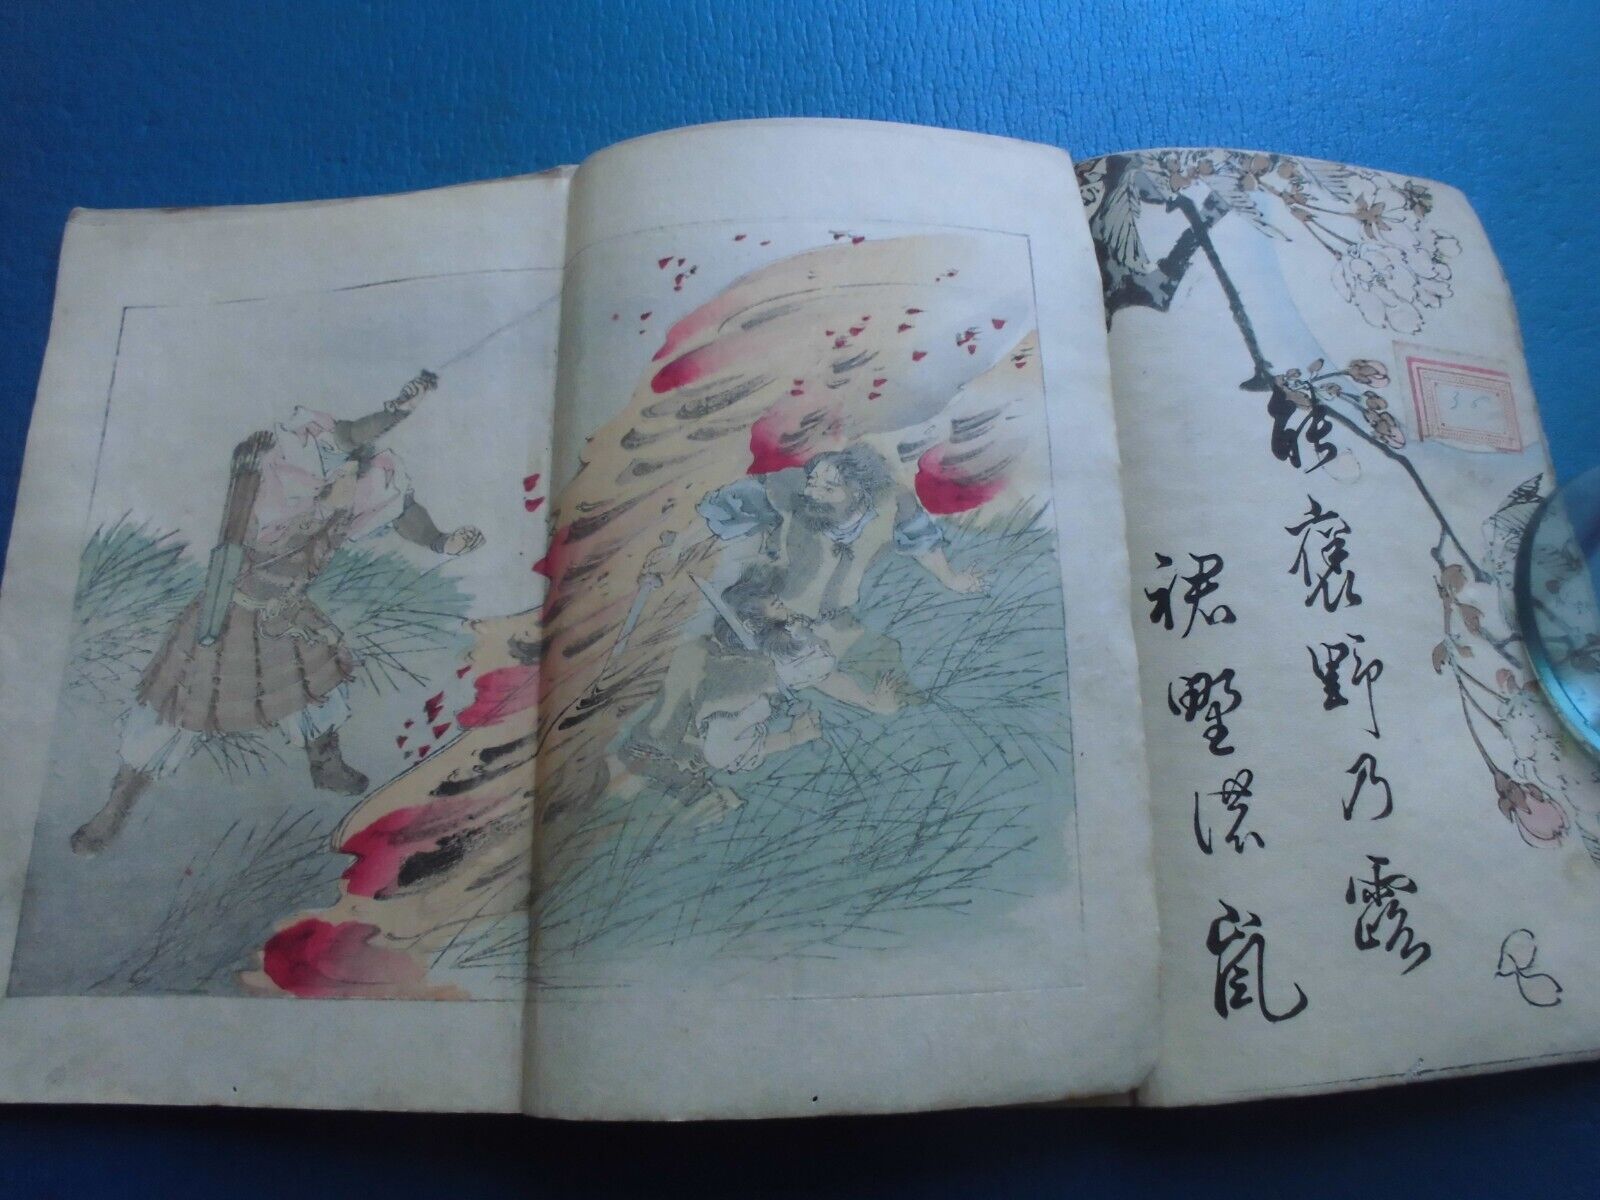 JAPANESE PRINT BOOK REKISHI JAPANESE HISTORICAL STORIES WOODBLOCK PRINTS MEIJI